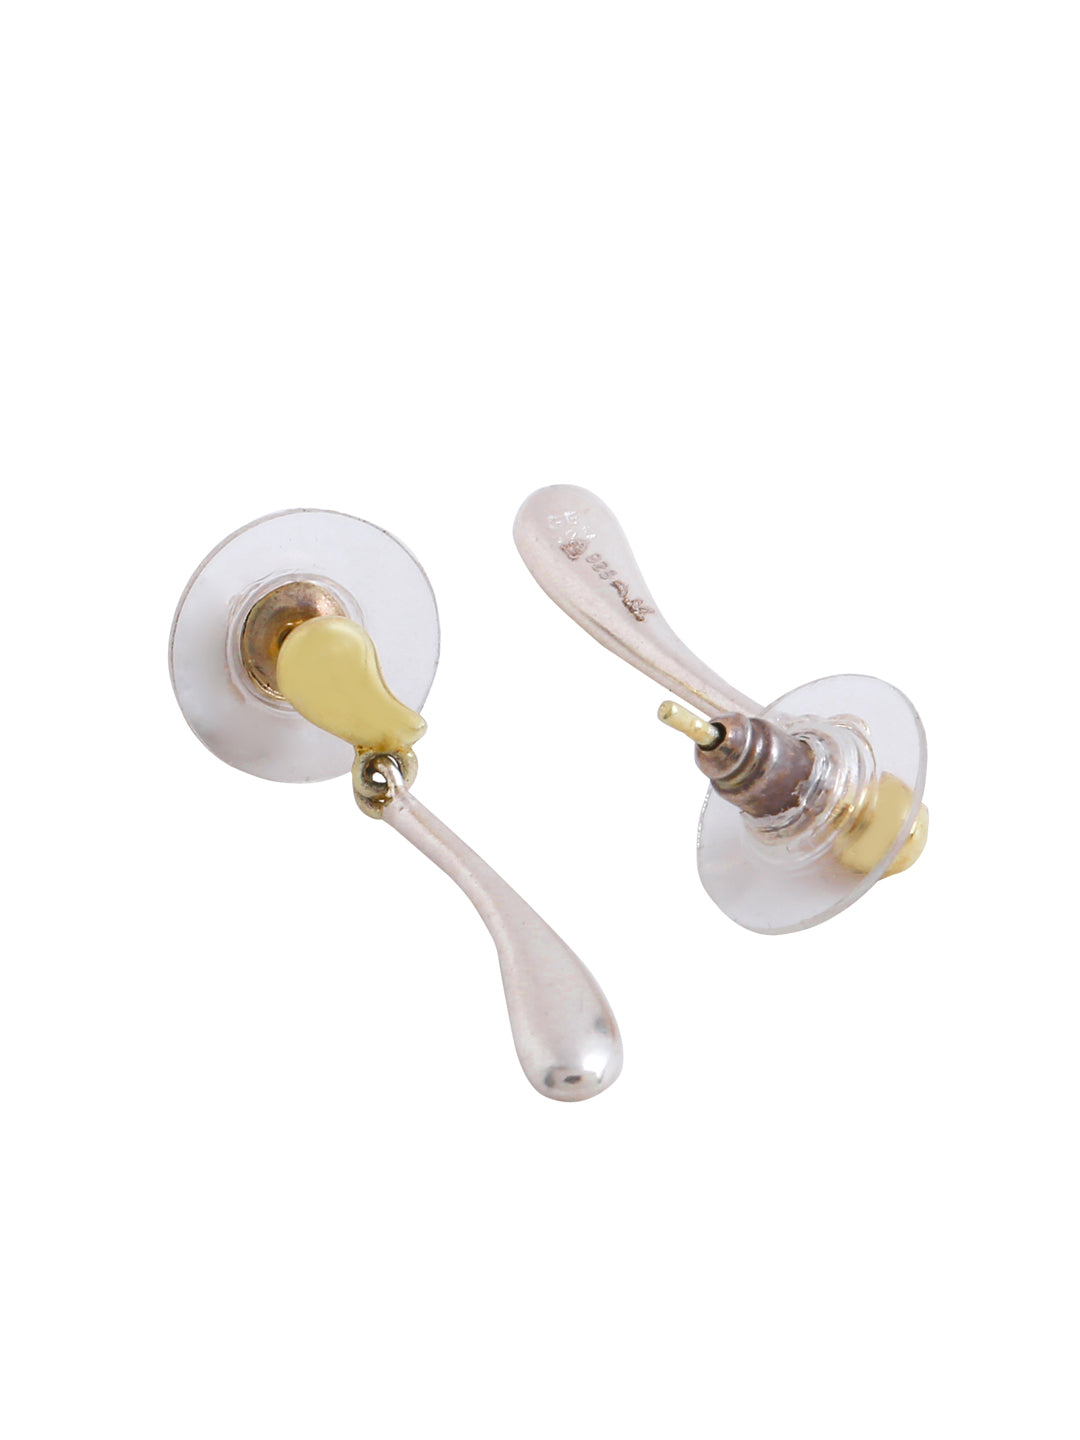 Elegant Contrasts: Dual Tone Silver Earring